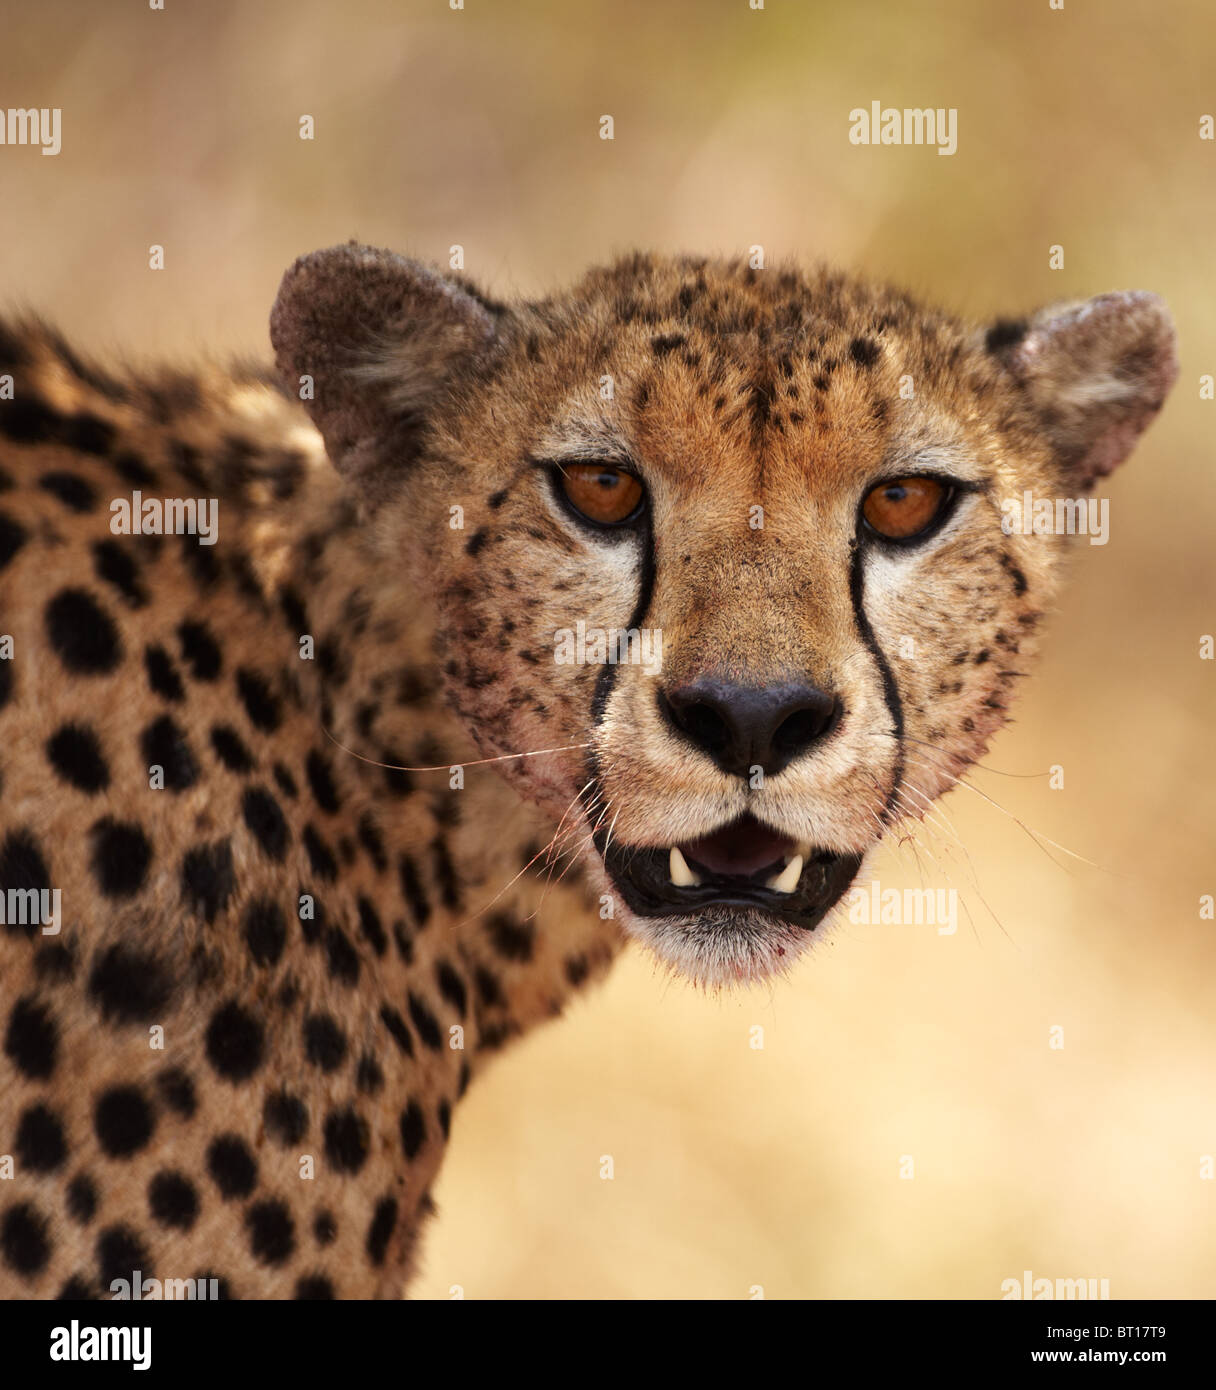 A close up view of a cheetah, taken in the Masai Mara, Kenya while on safari. Stock Photo